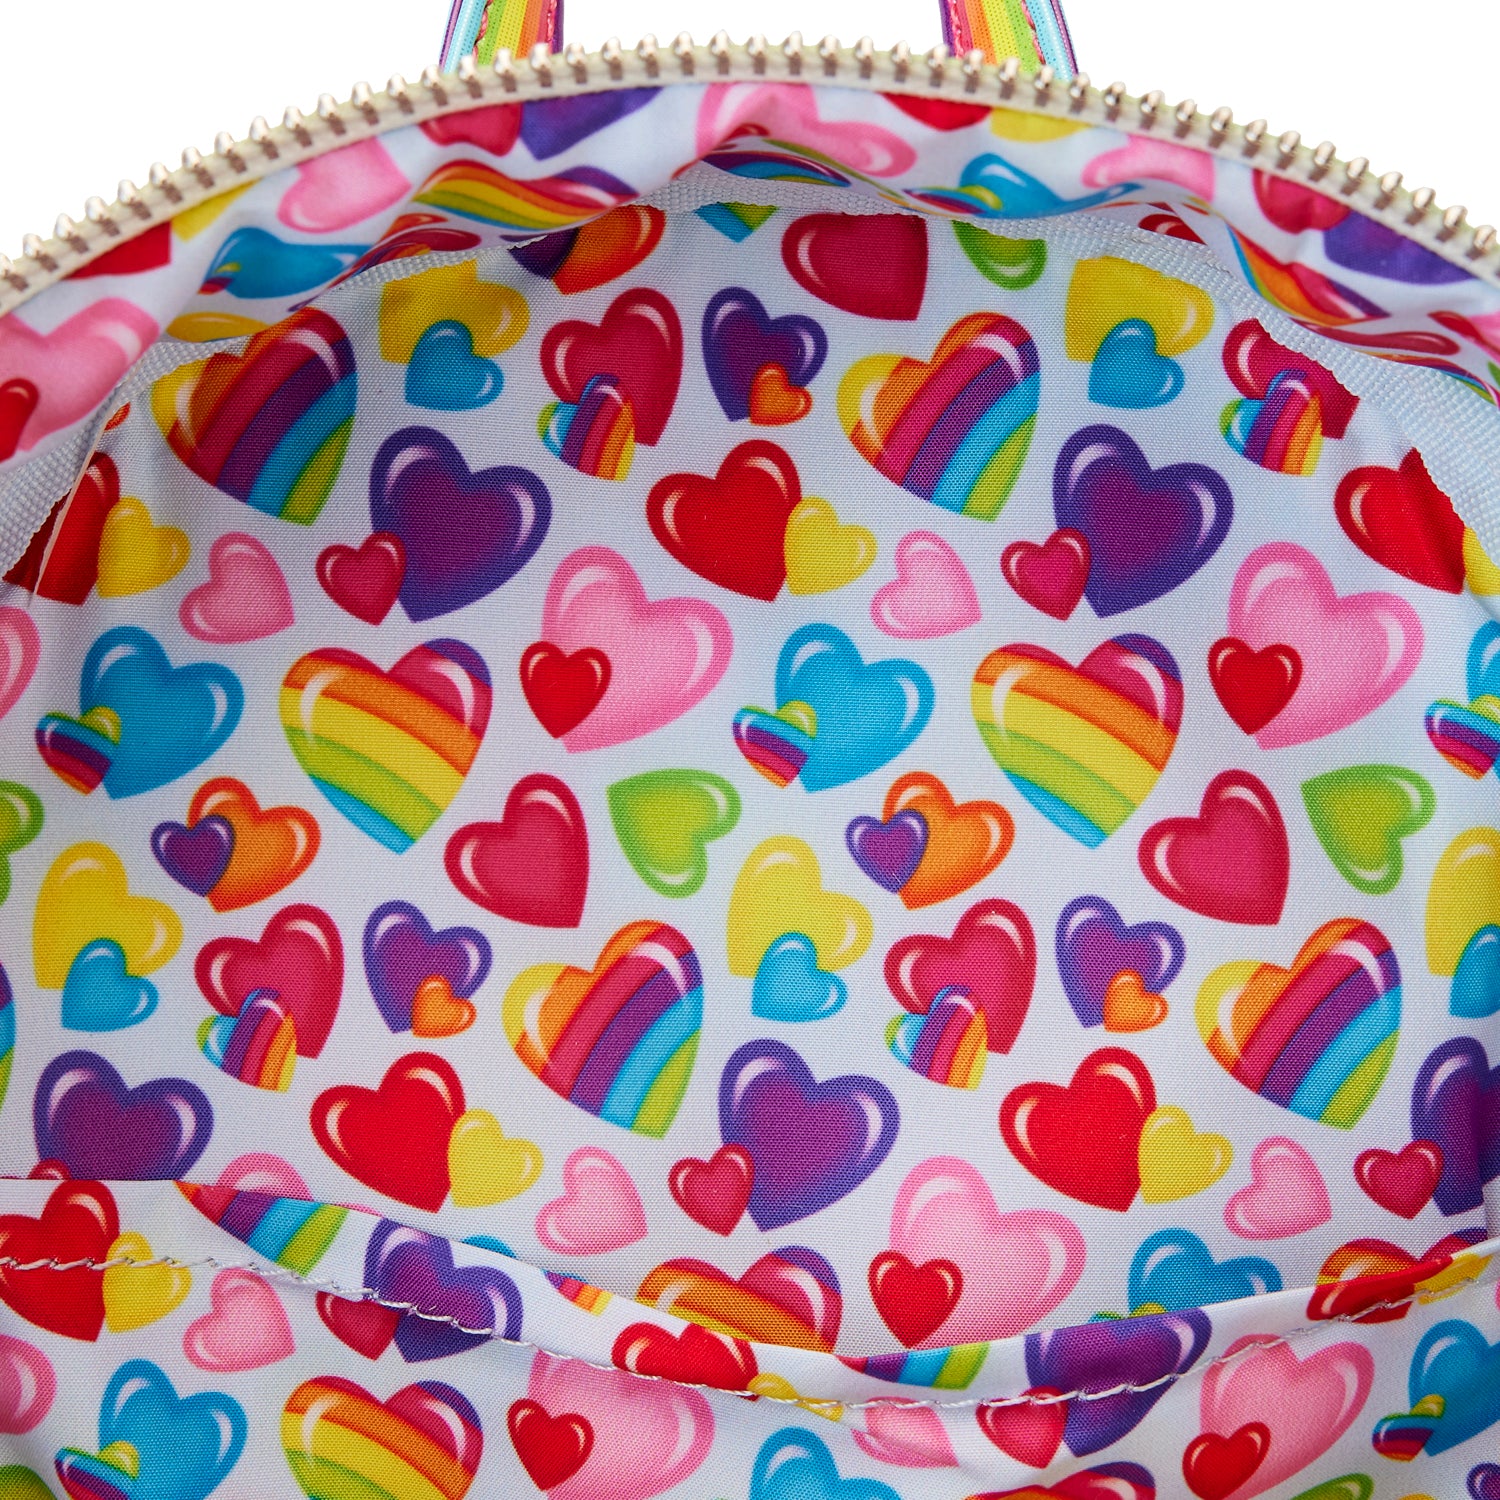 Loungefly x Lisa Frank Rainbow Heart Mini Backpack